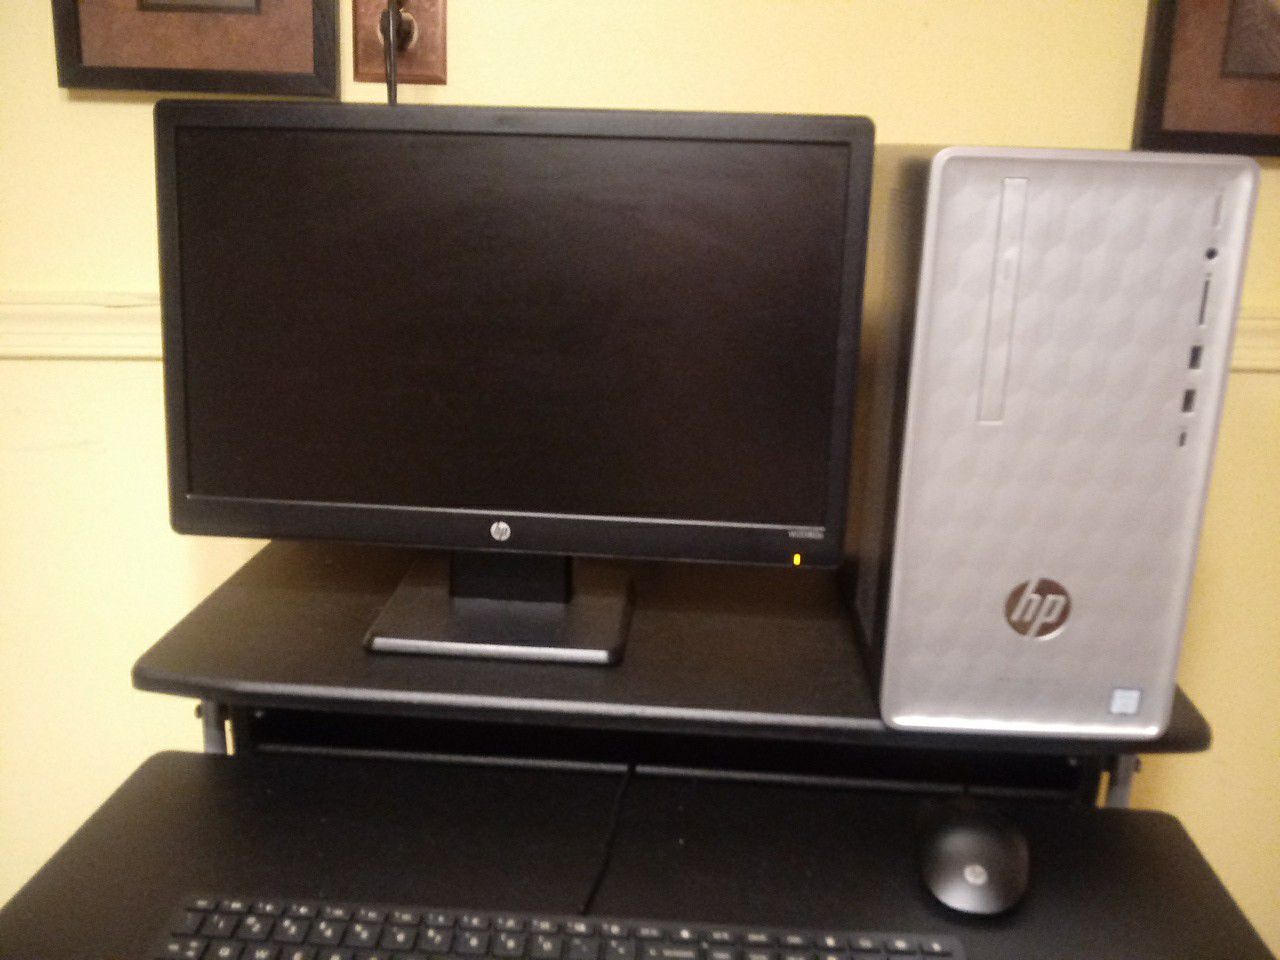 HP CPU, Monitor, Keyboard, and Brand new Printer